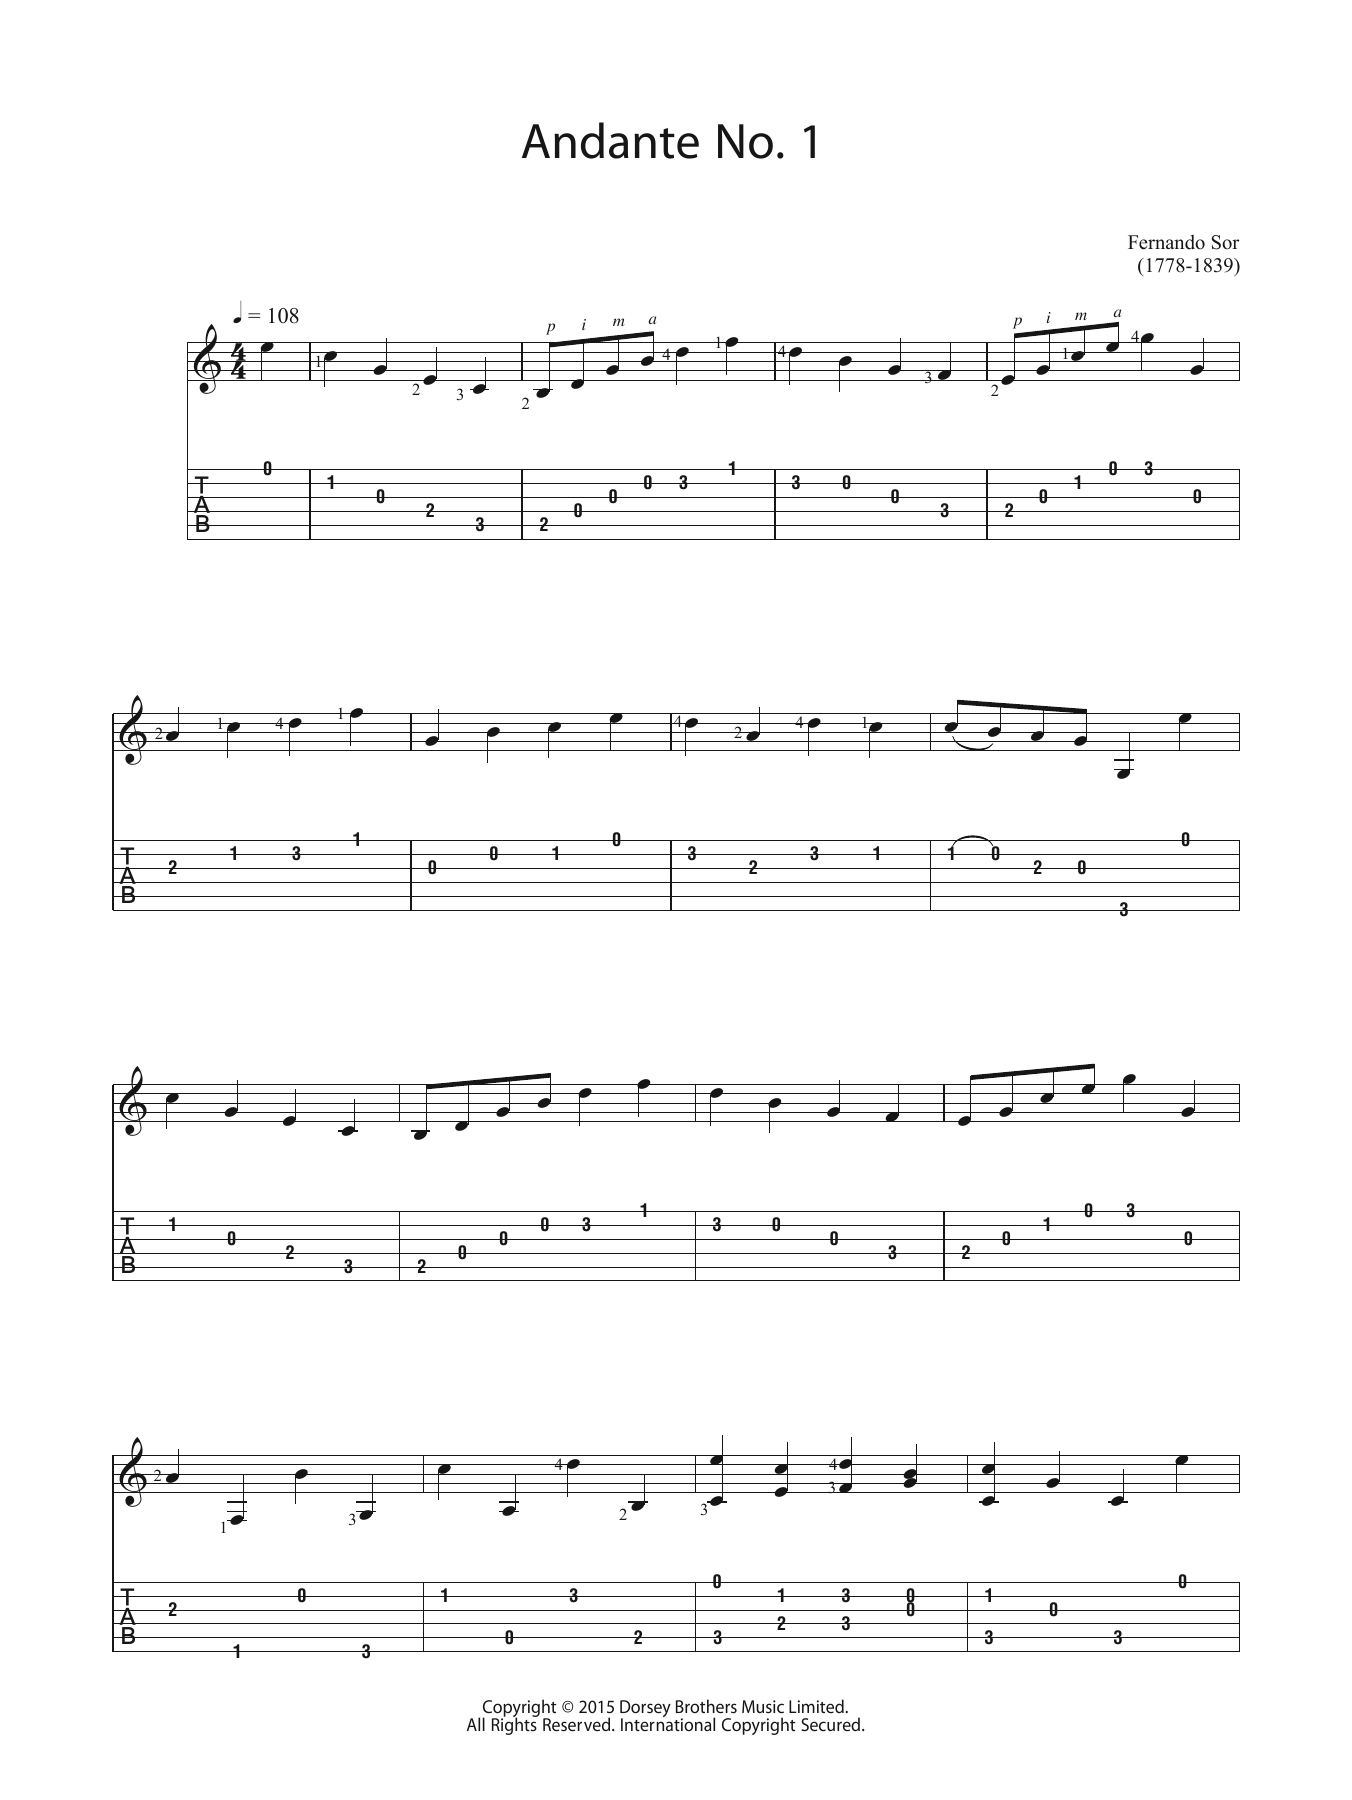 Fernando Sor Andante No. 1 Sheet Music Notes & Chords for Guitar - Download or Print PDF